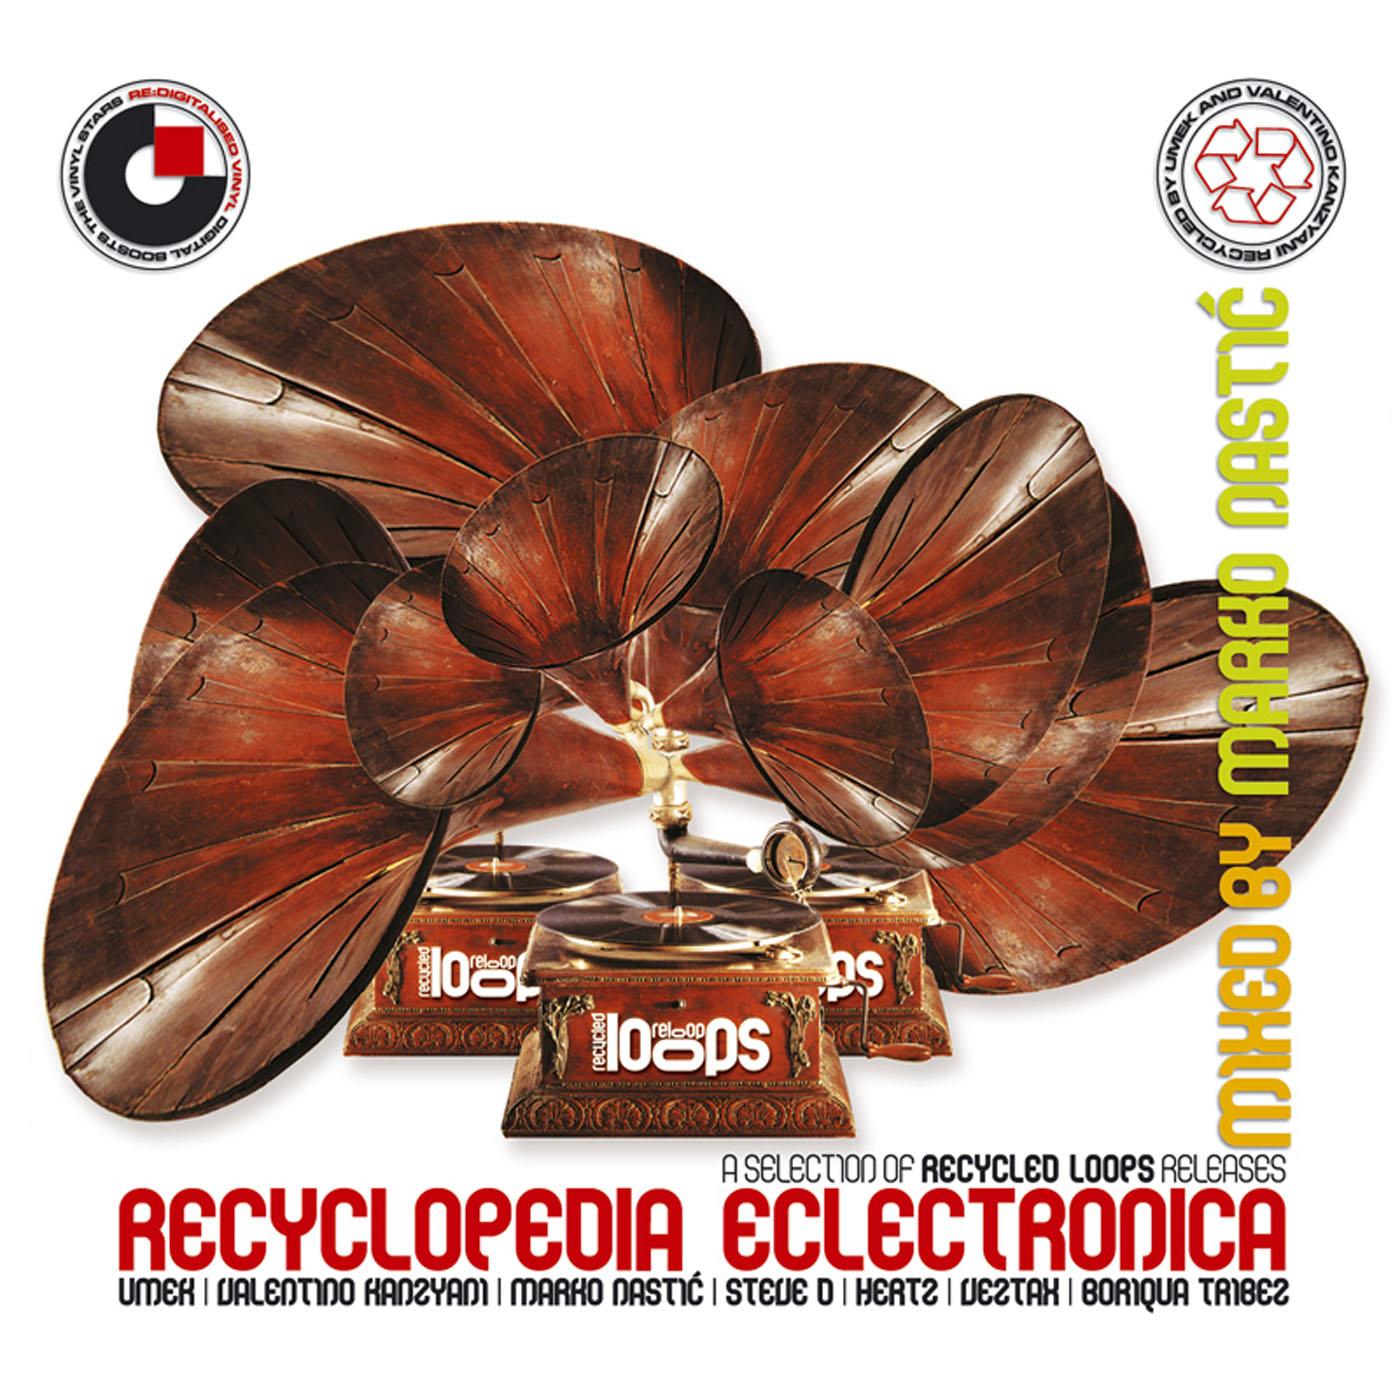 Recyclopedia Eclectronica